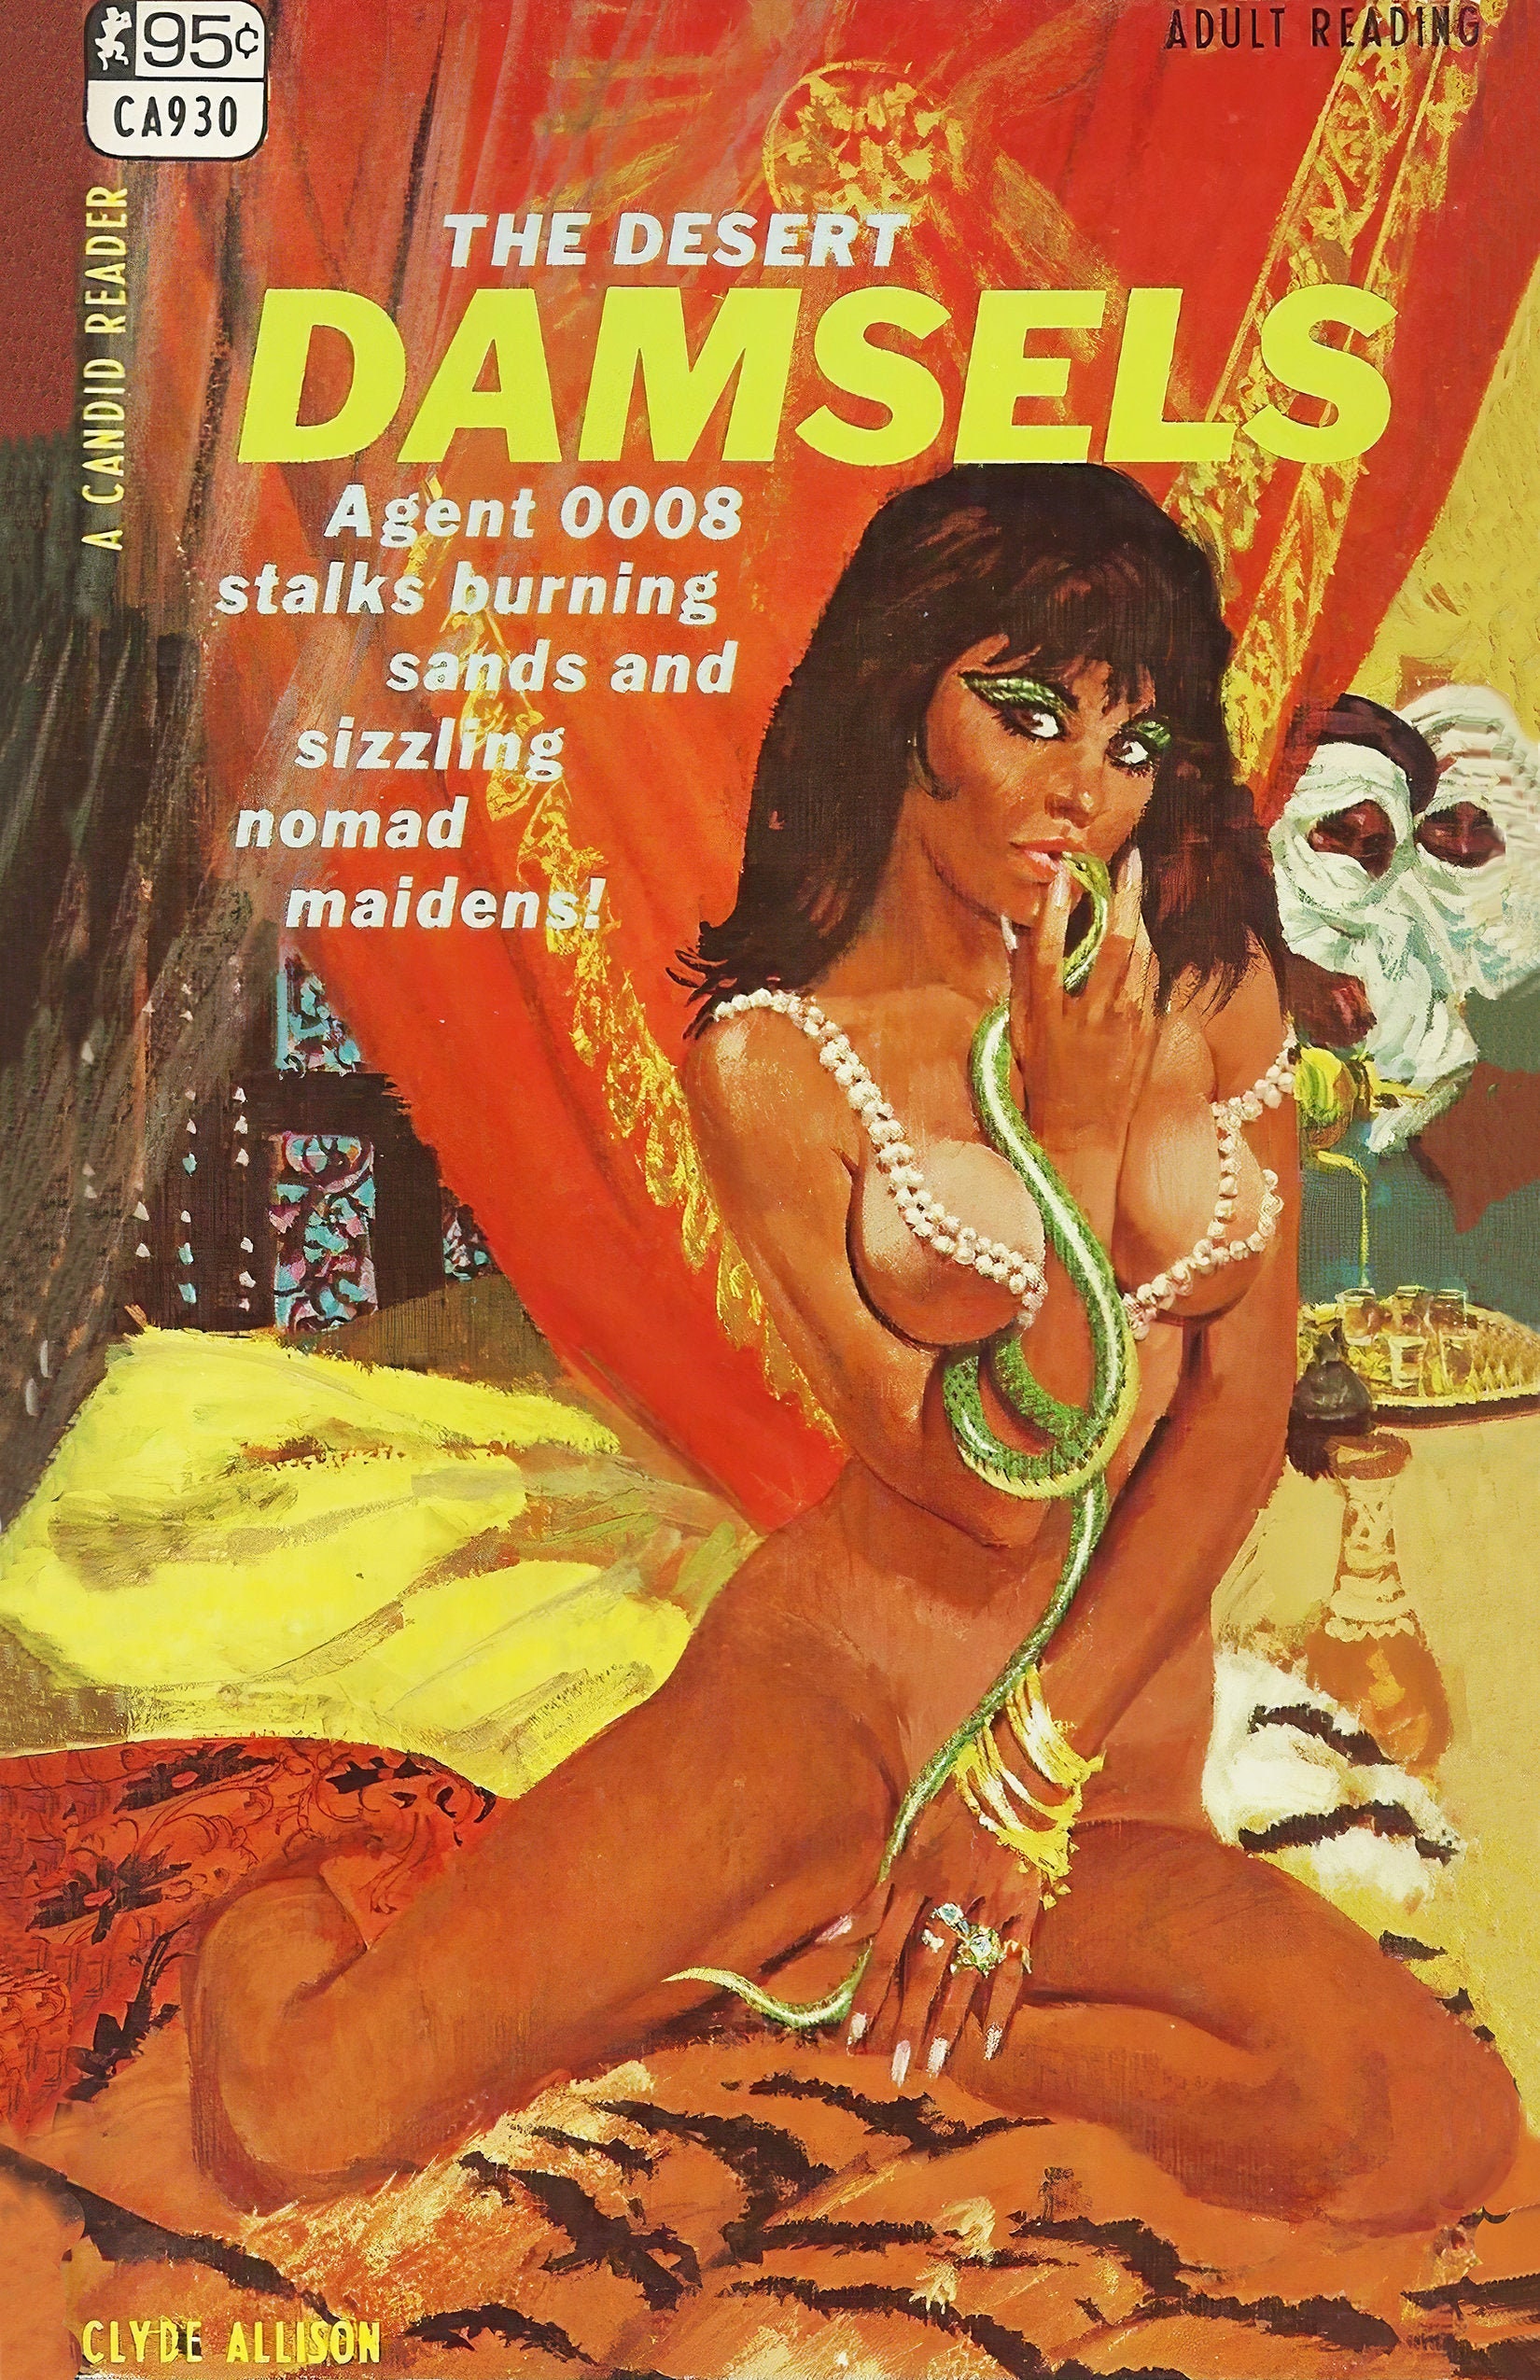 Vintage Erotic Pulp Poster the Desert Damsels - Etsy